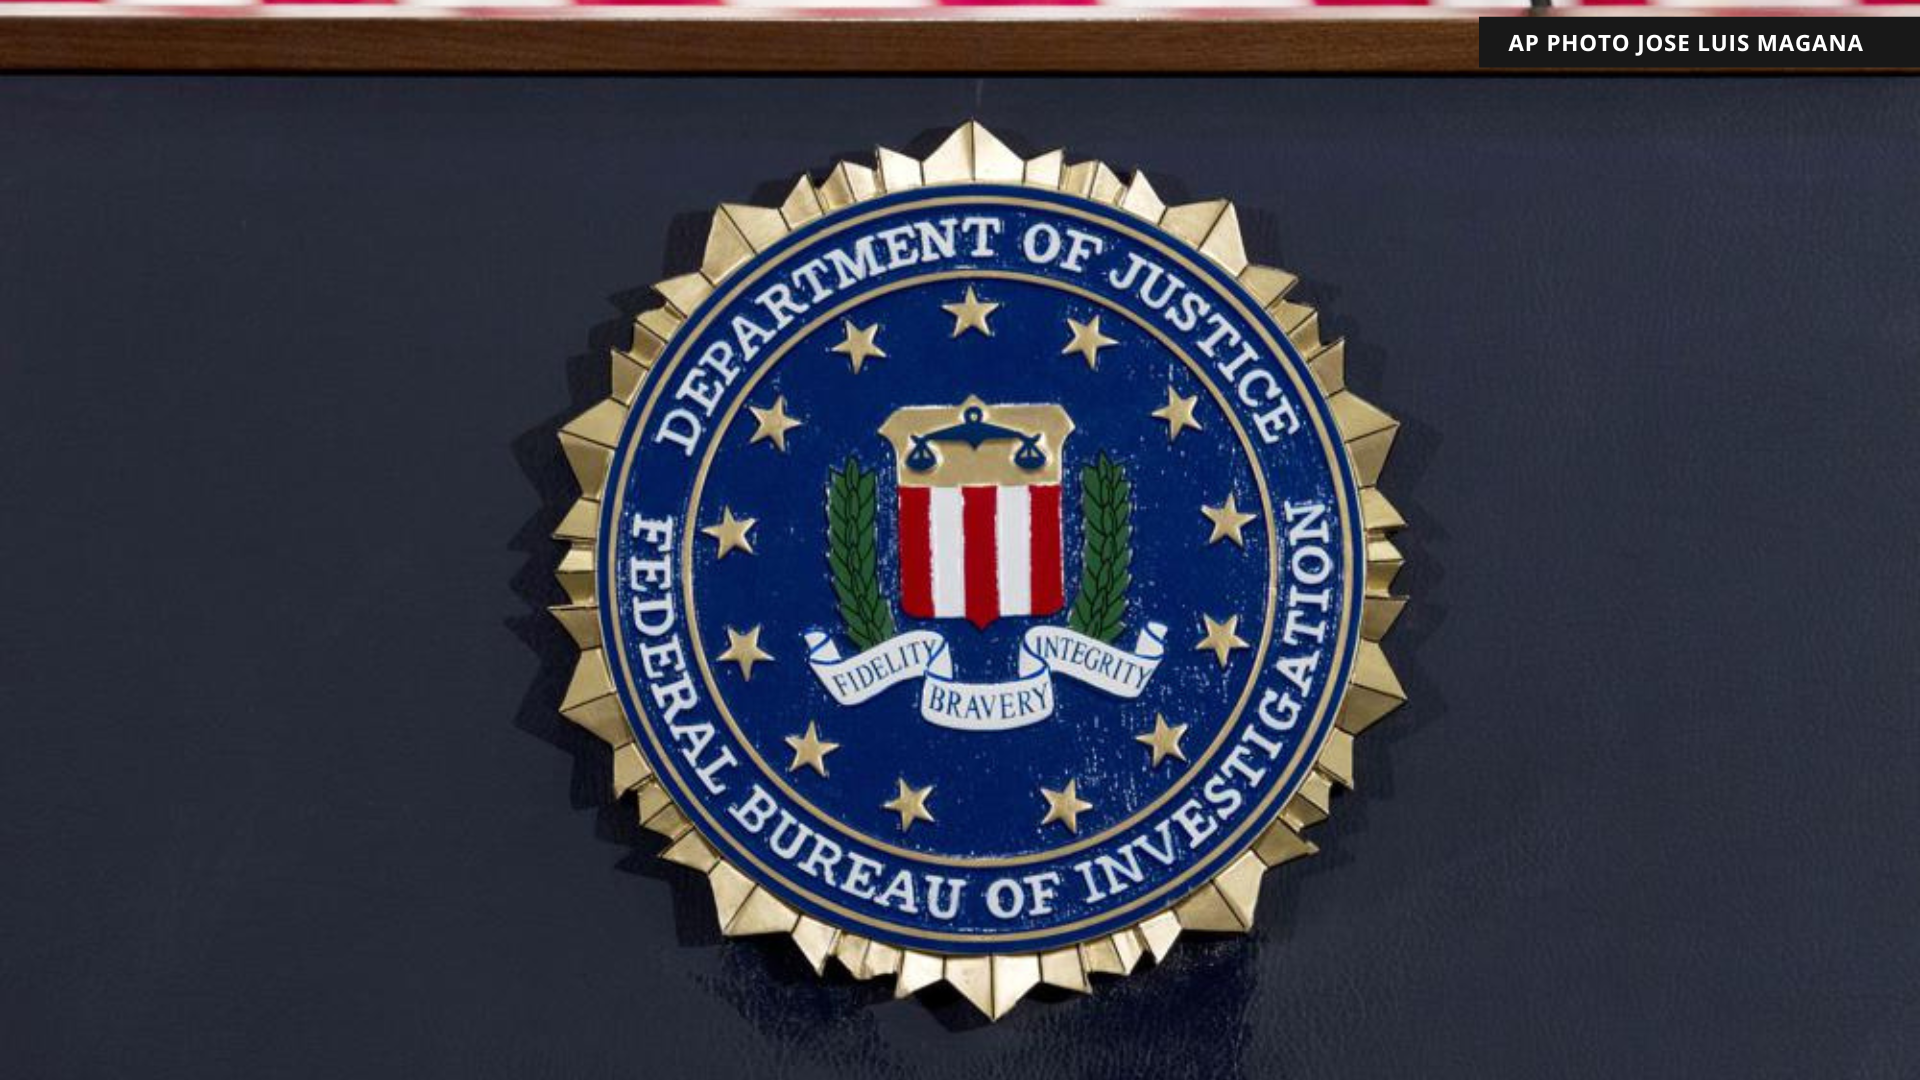 Virginia, Maryland, Vie for New FBI Headquarters